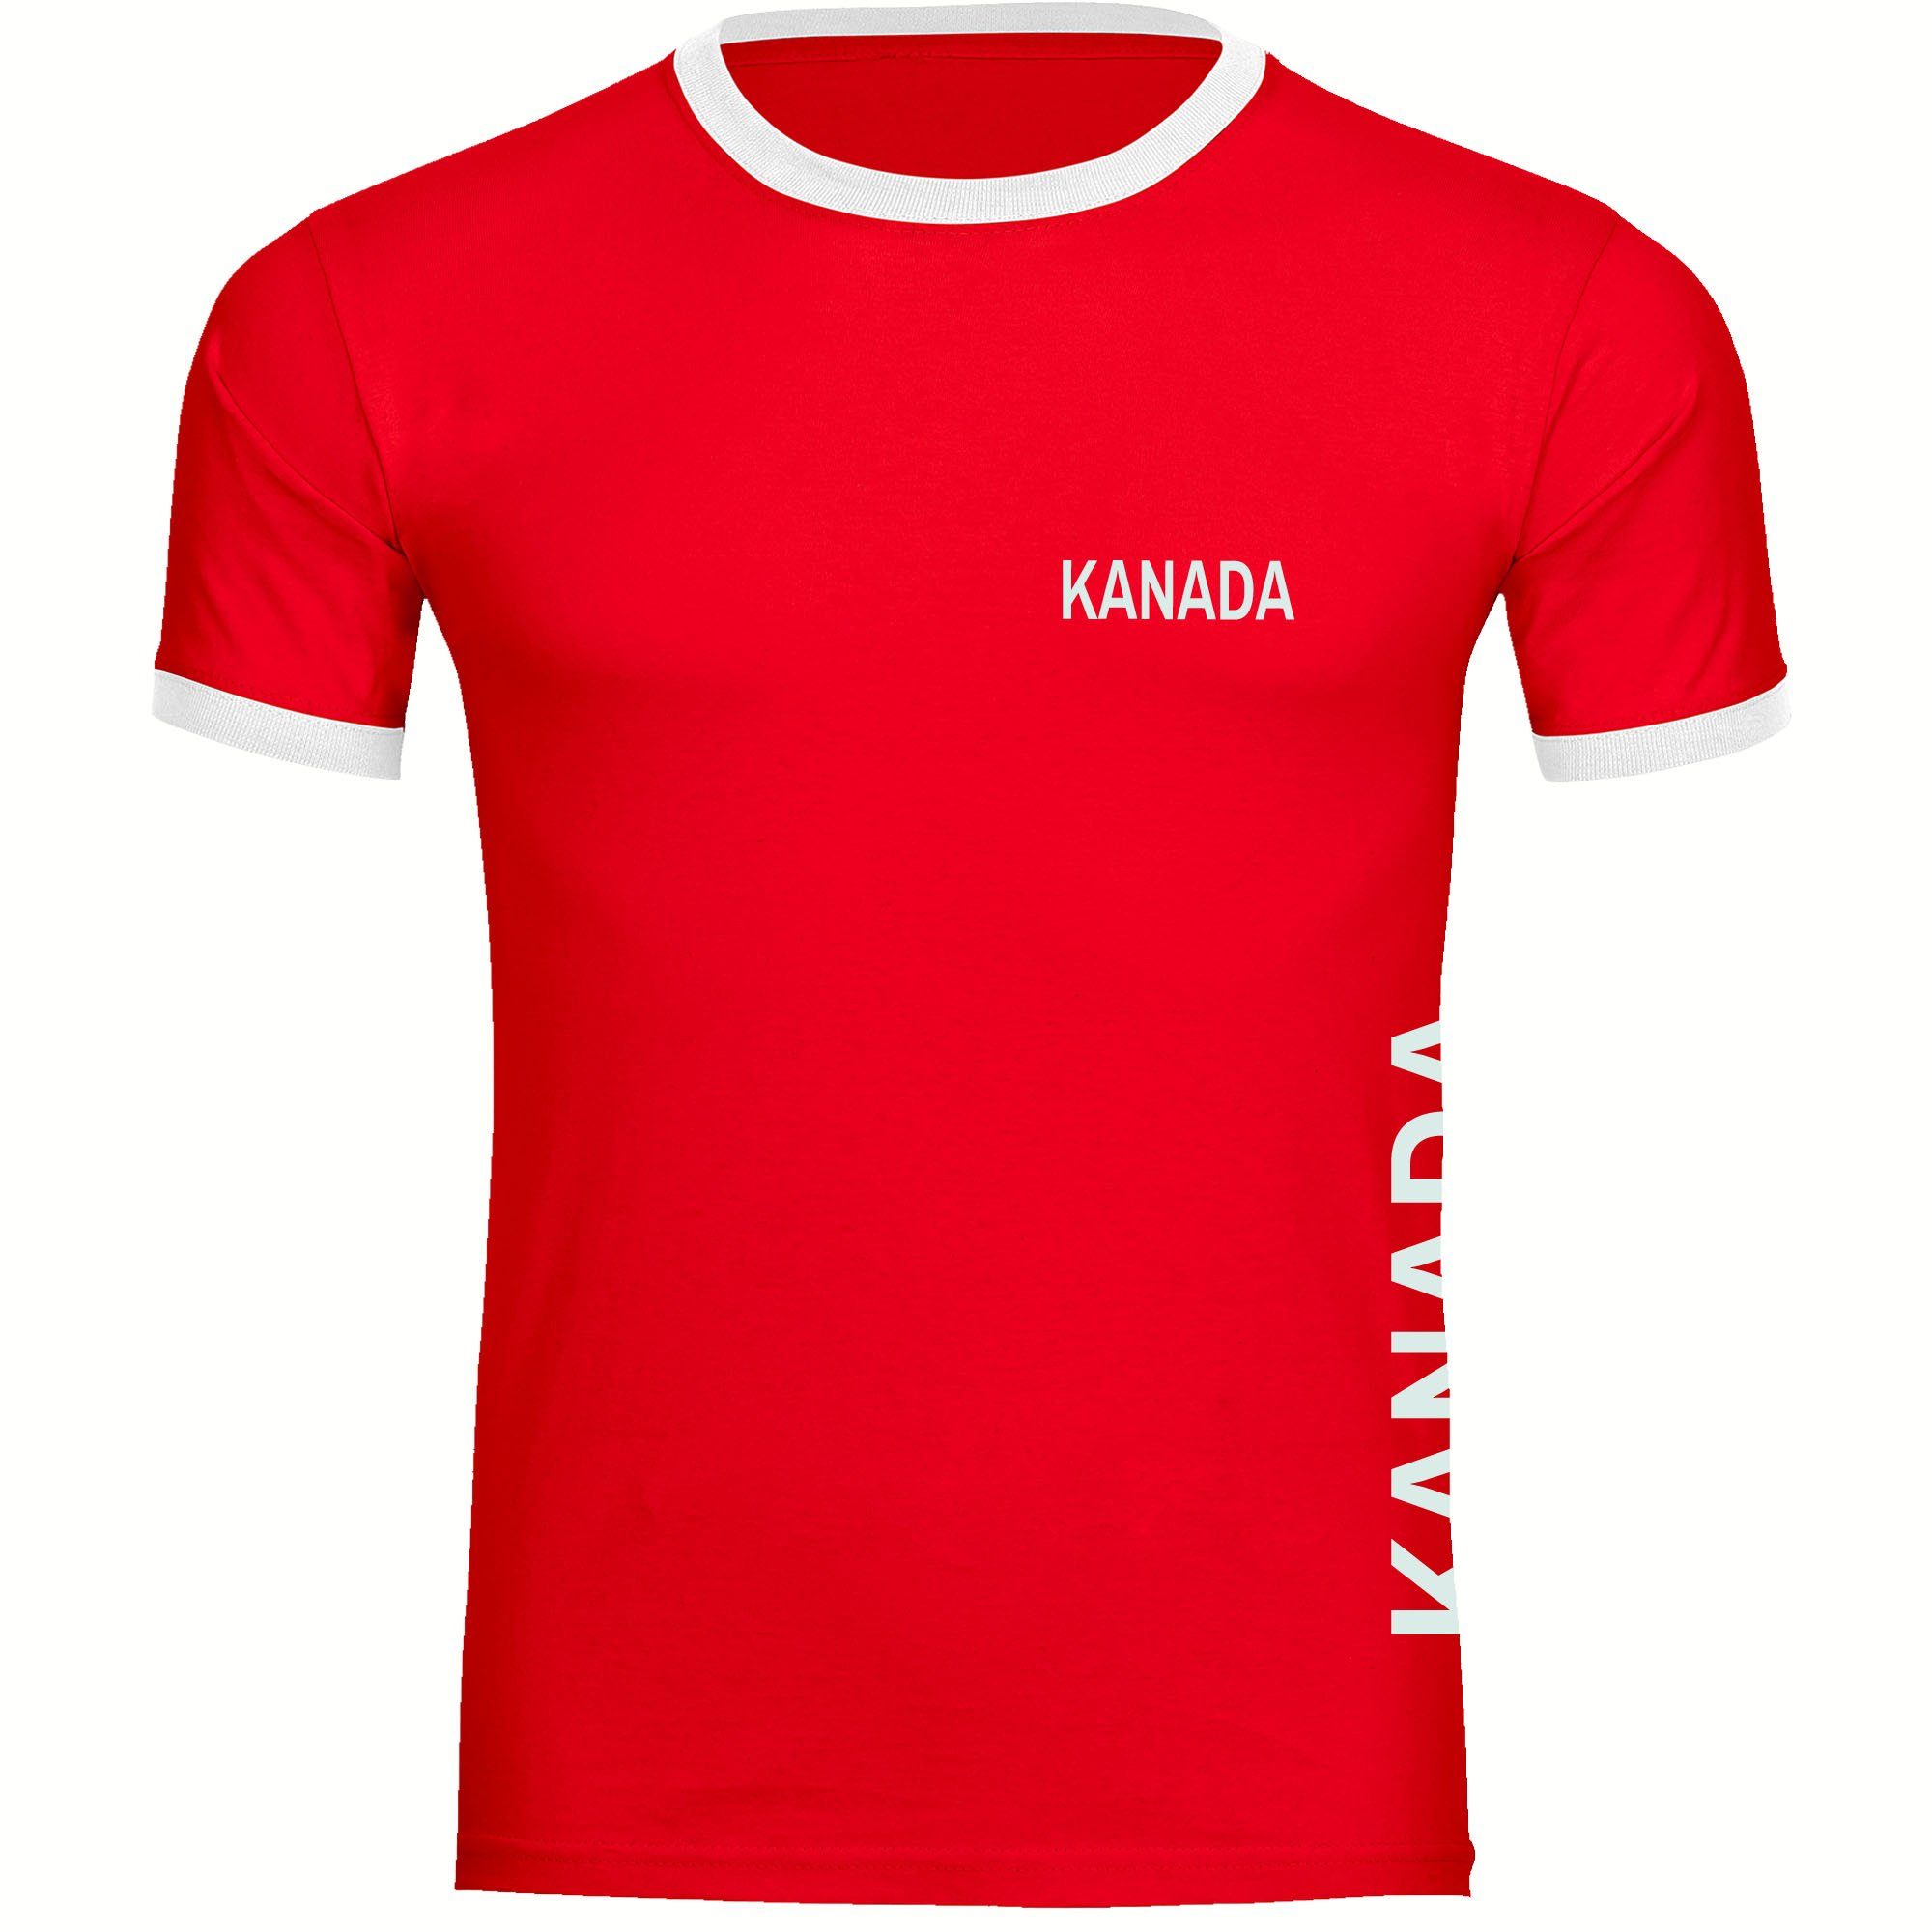 multifanshop T-Shirt Kontrast Kanada - Brust & Seite - Männer